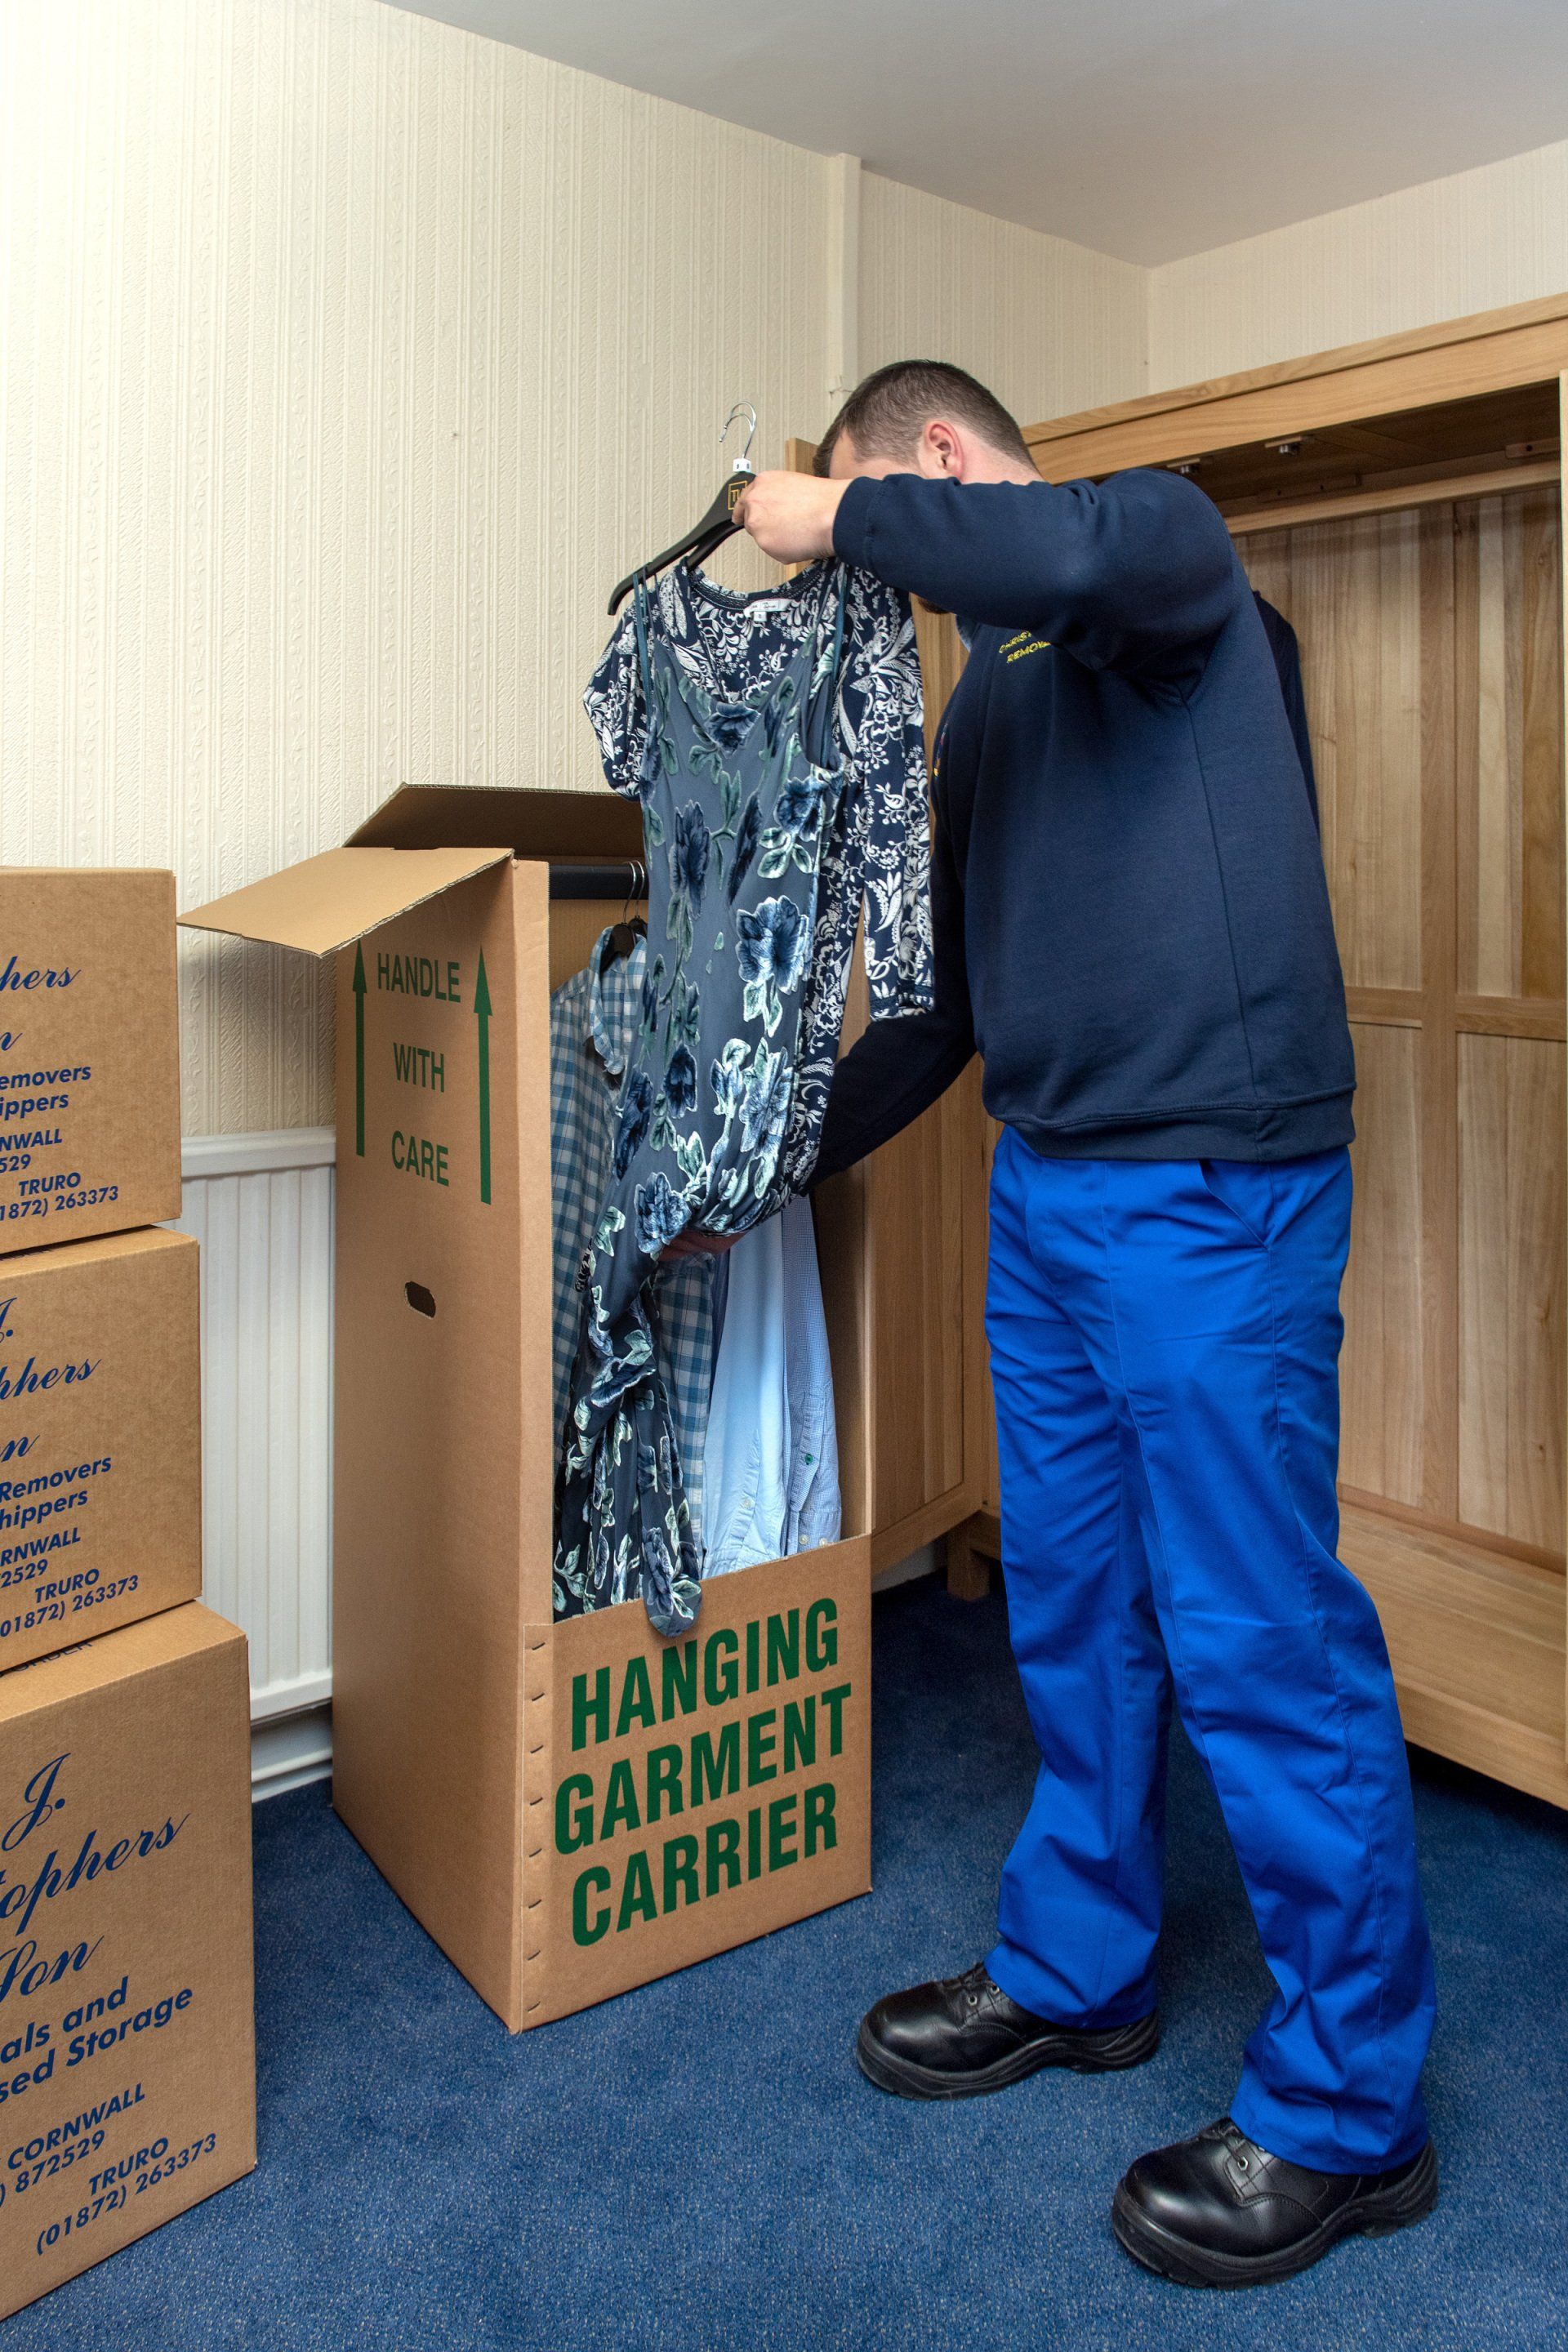 Hanging garment carrier